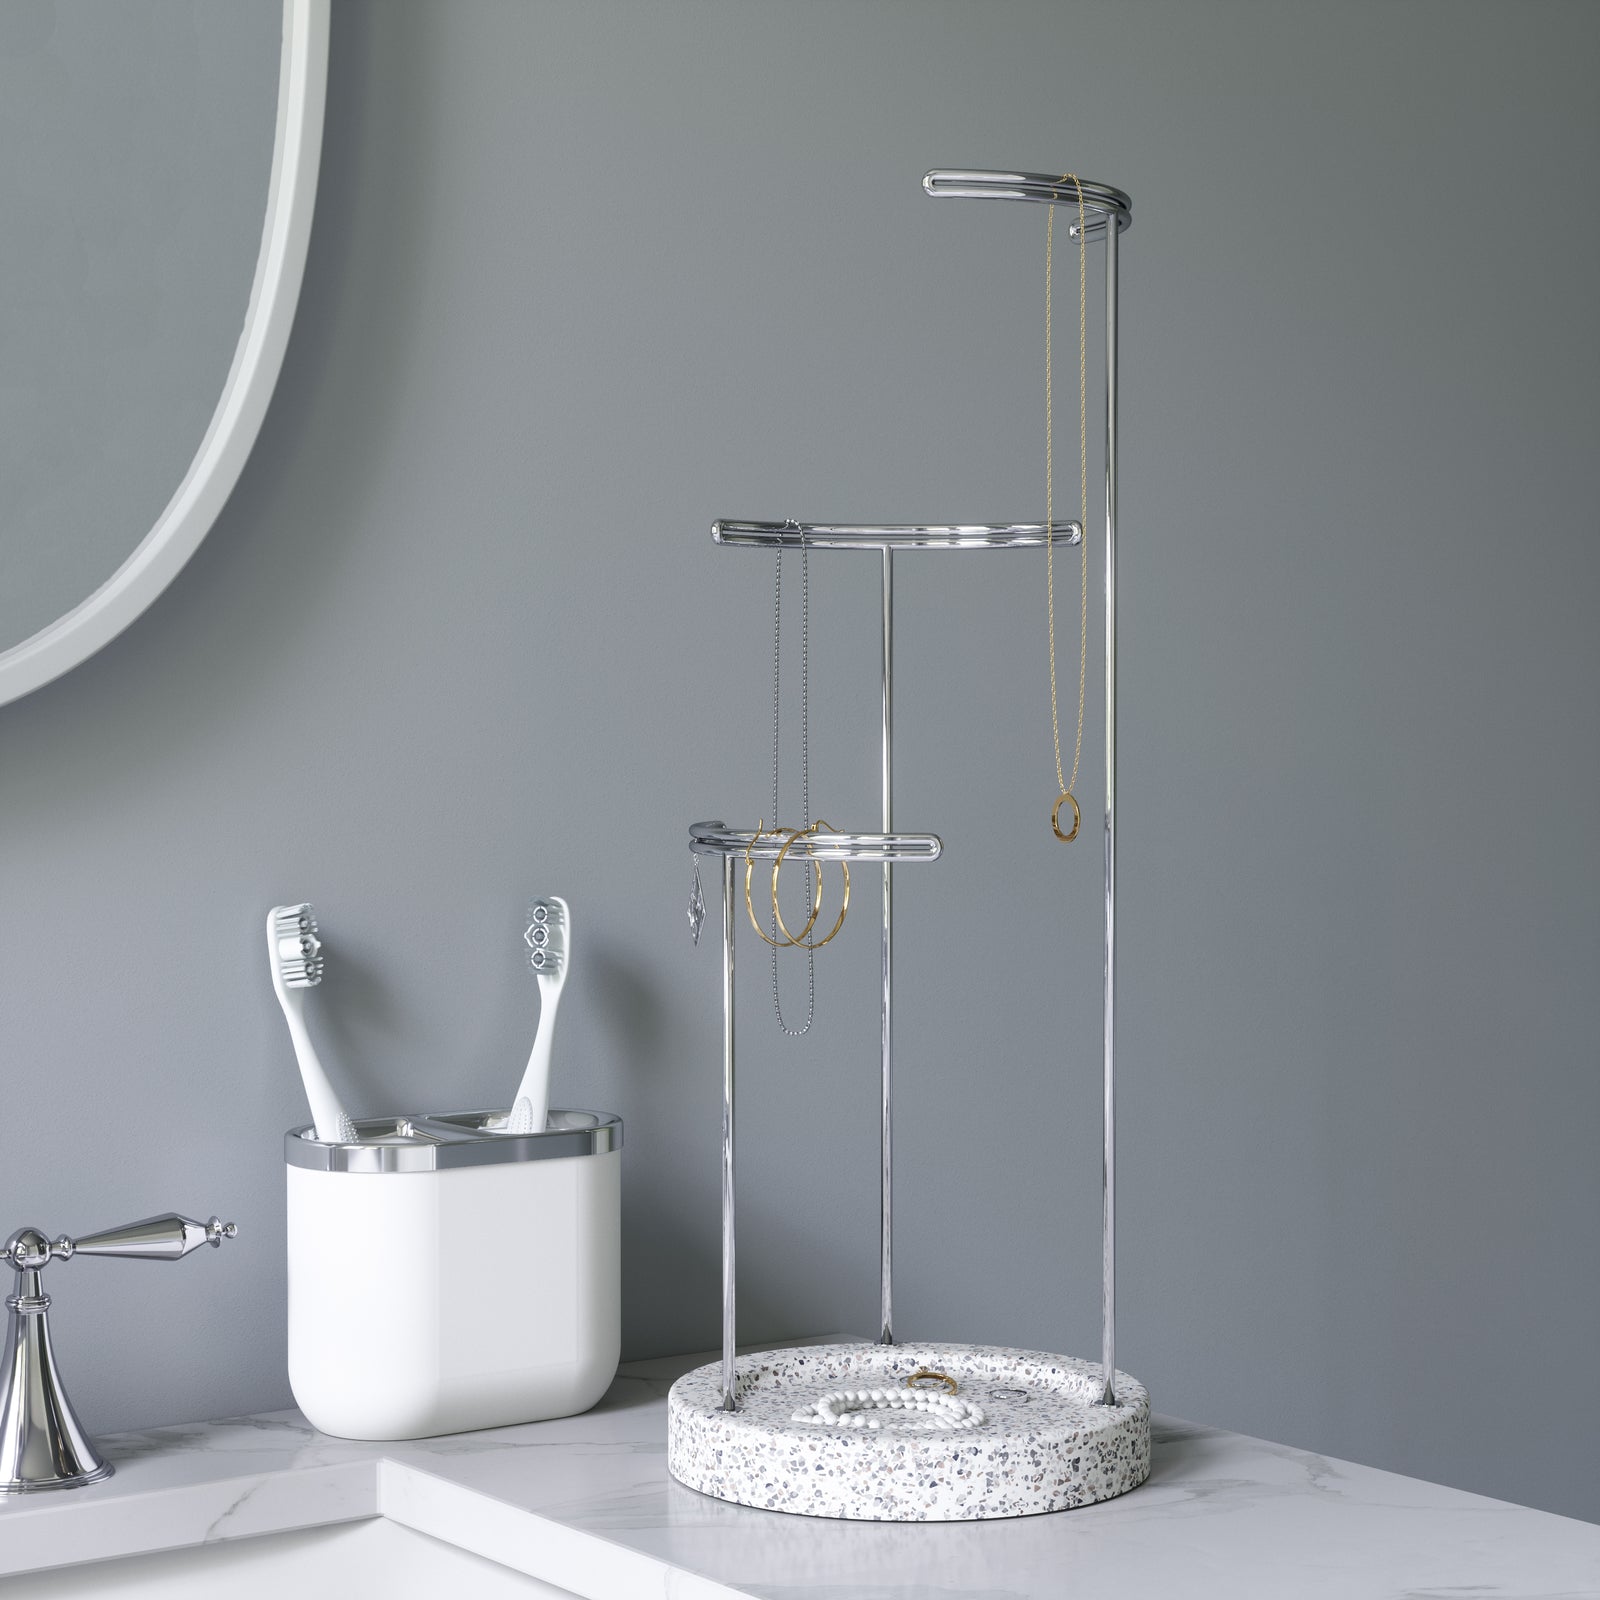 Add Contemporary Coziness to Your Bathroom Vanity